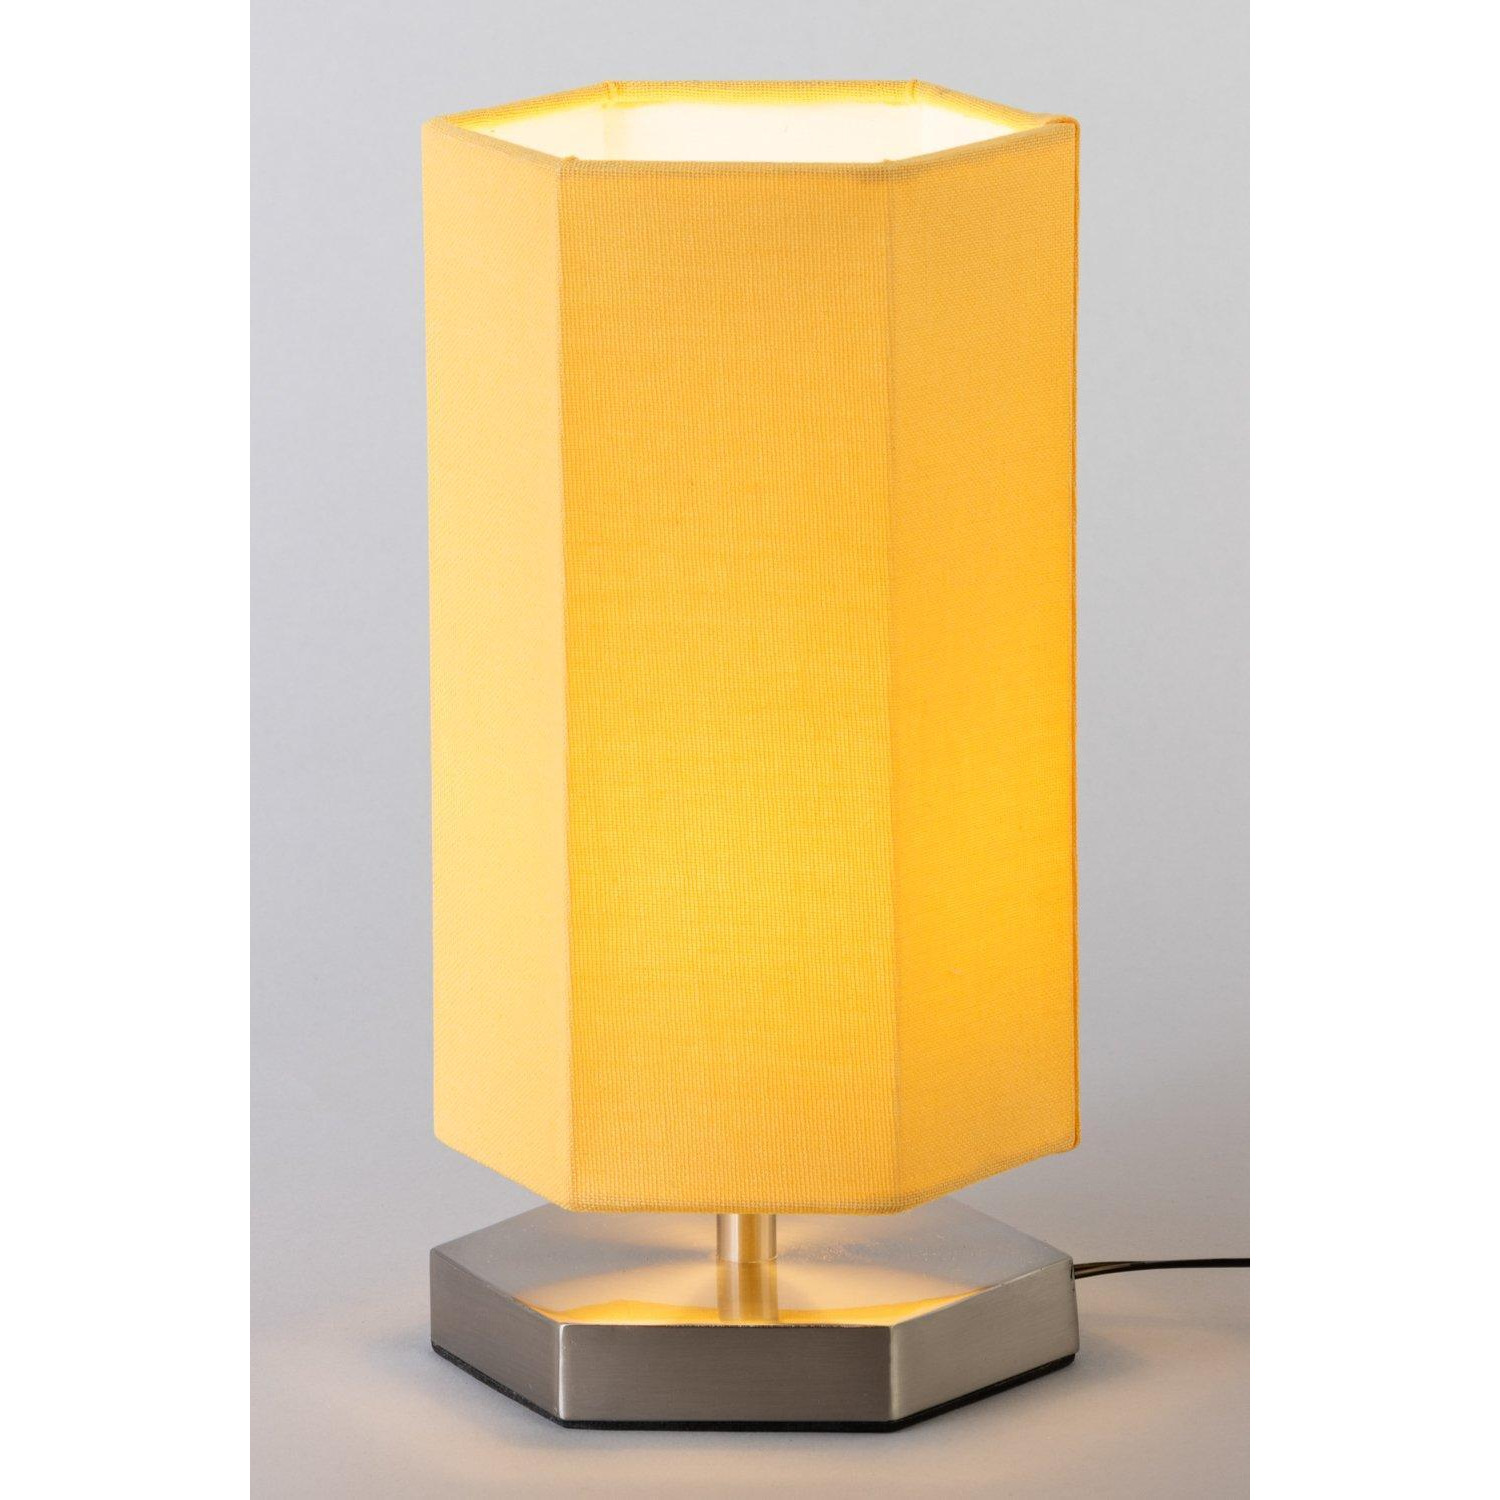 Glow Hexagon Table Lamp - image 1